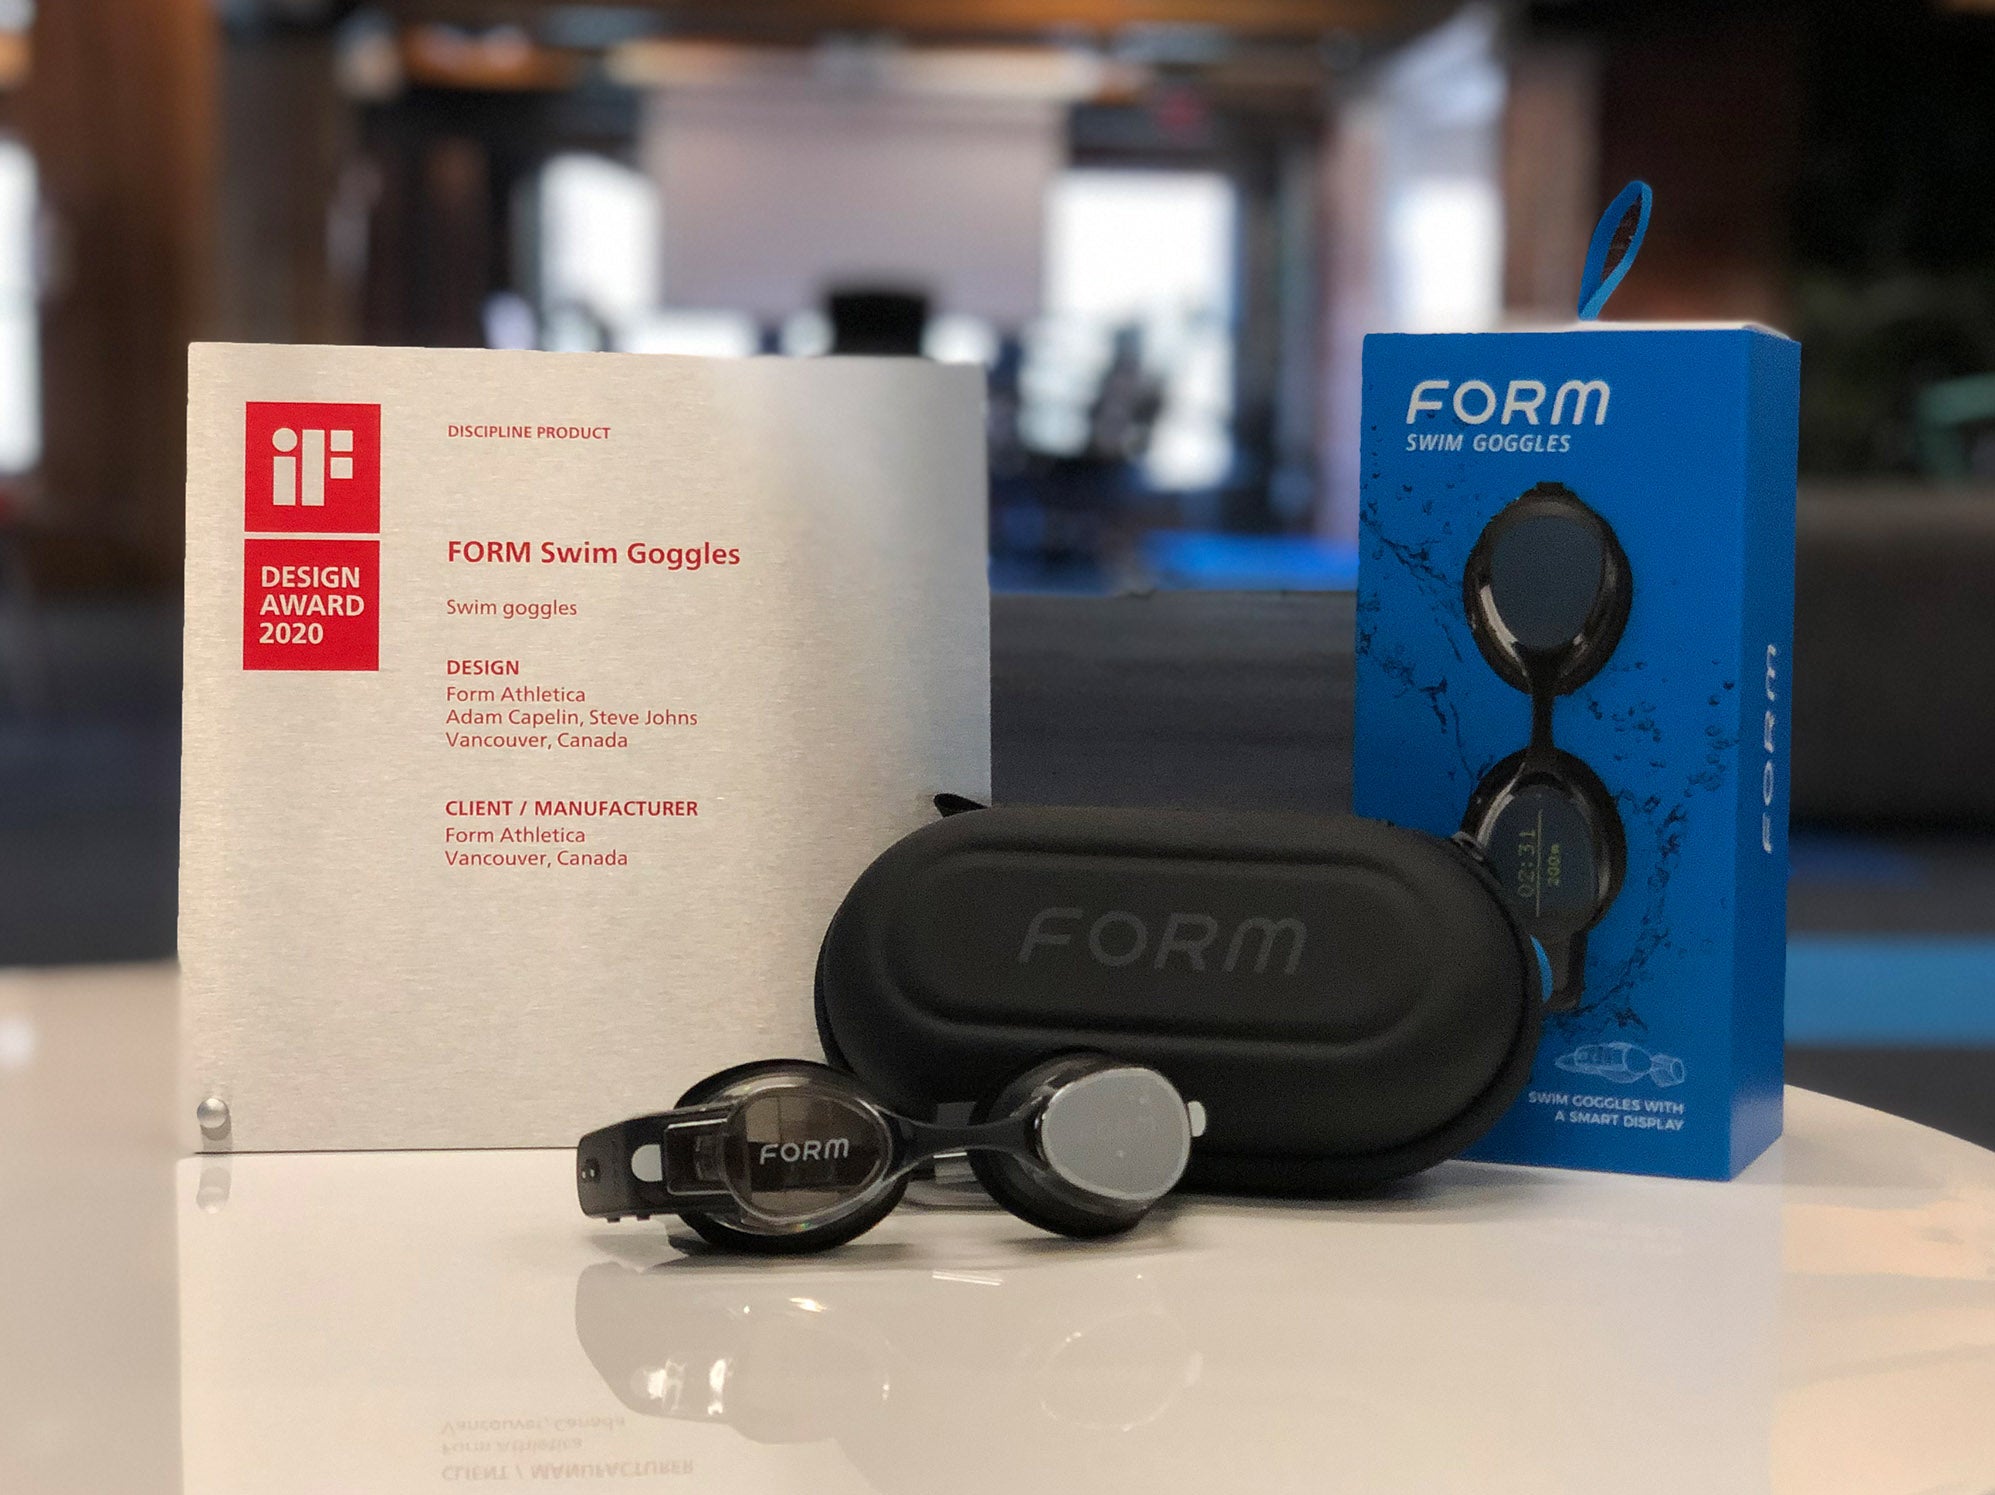 iF Design Award 2020 Winner FORM Smart Swim Goggles